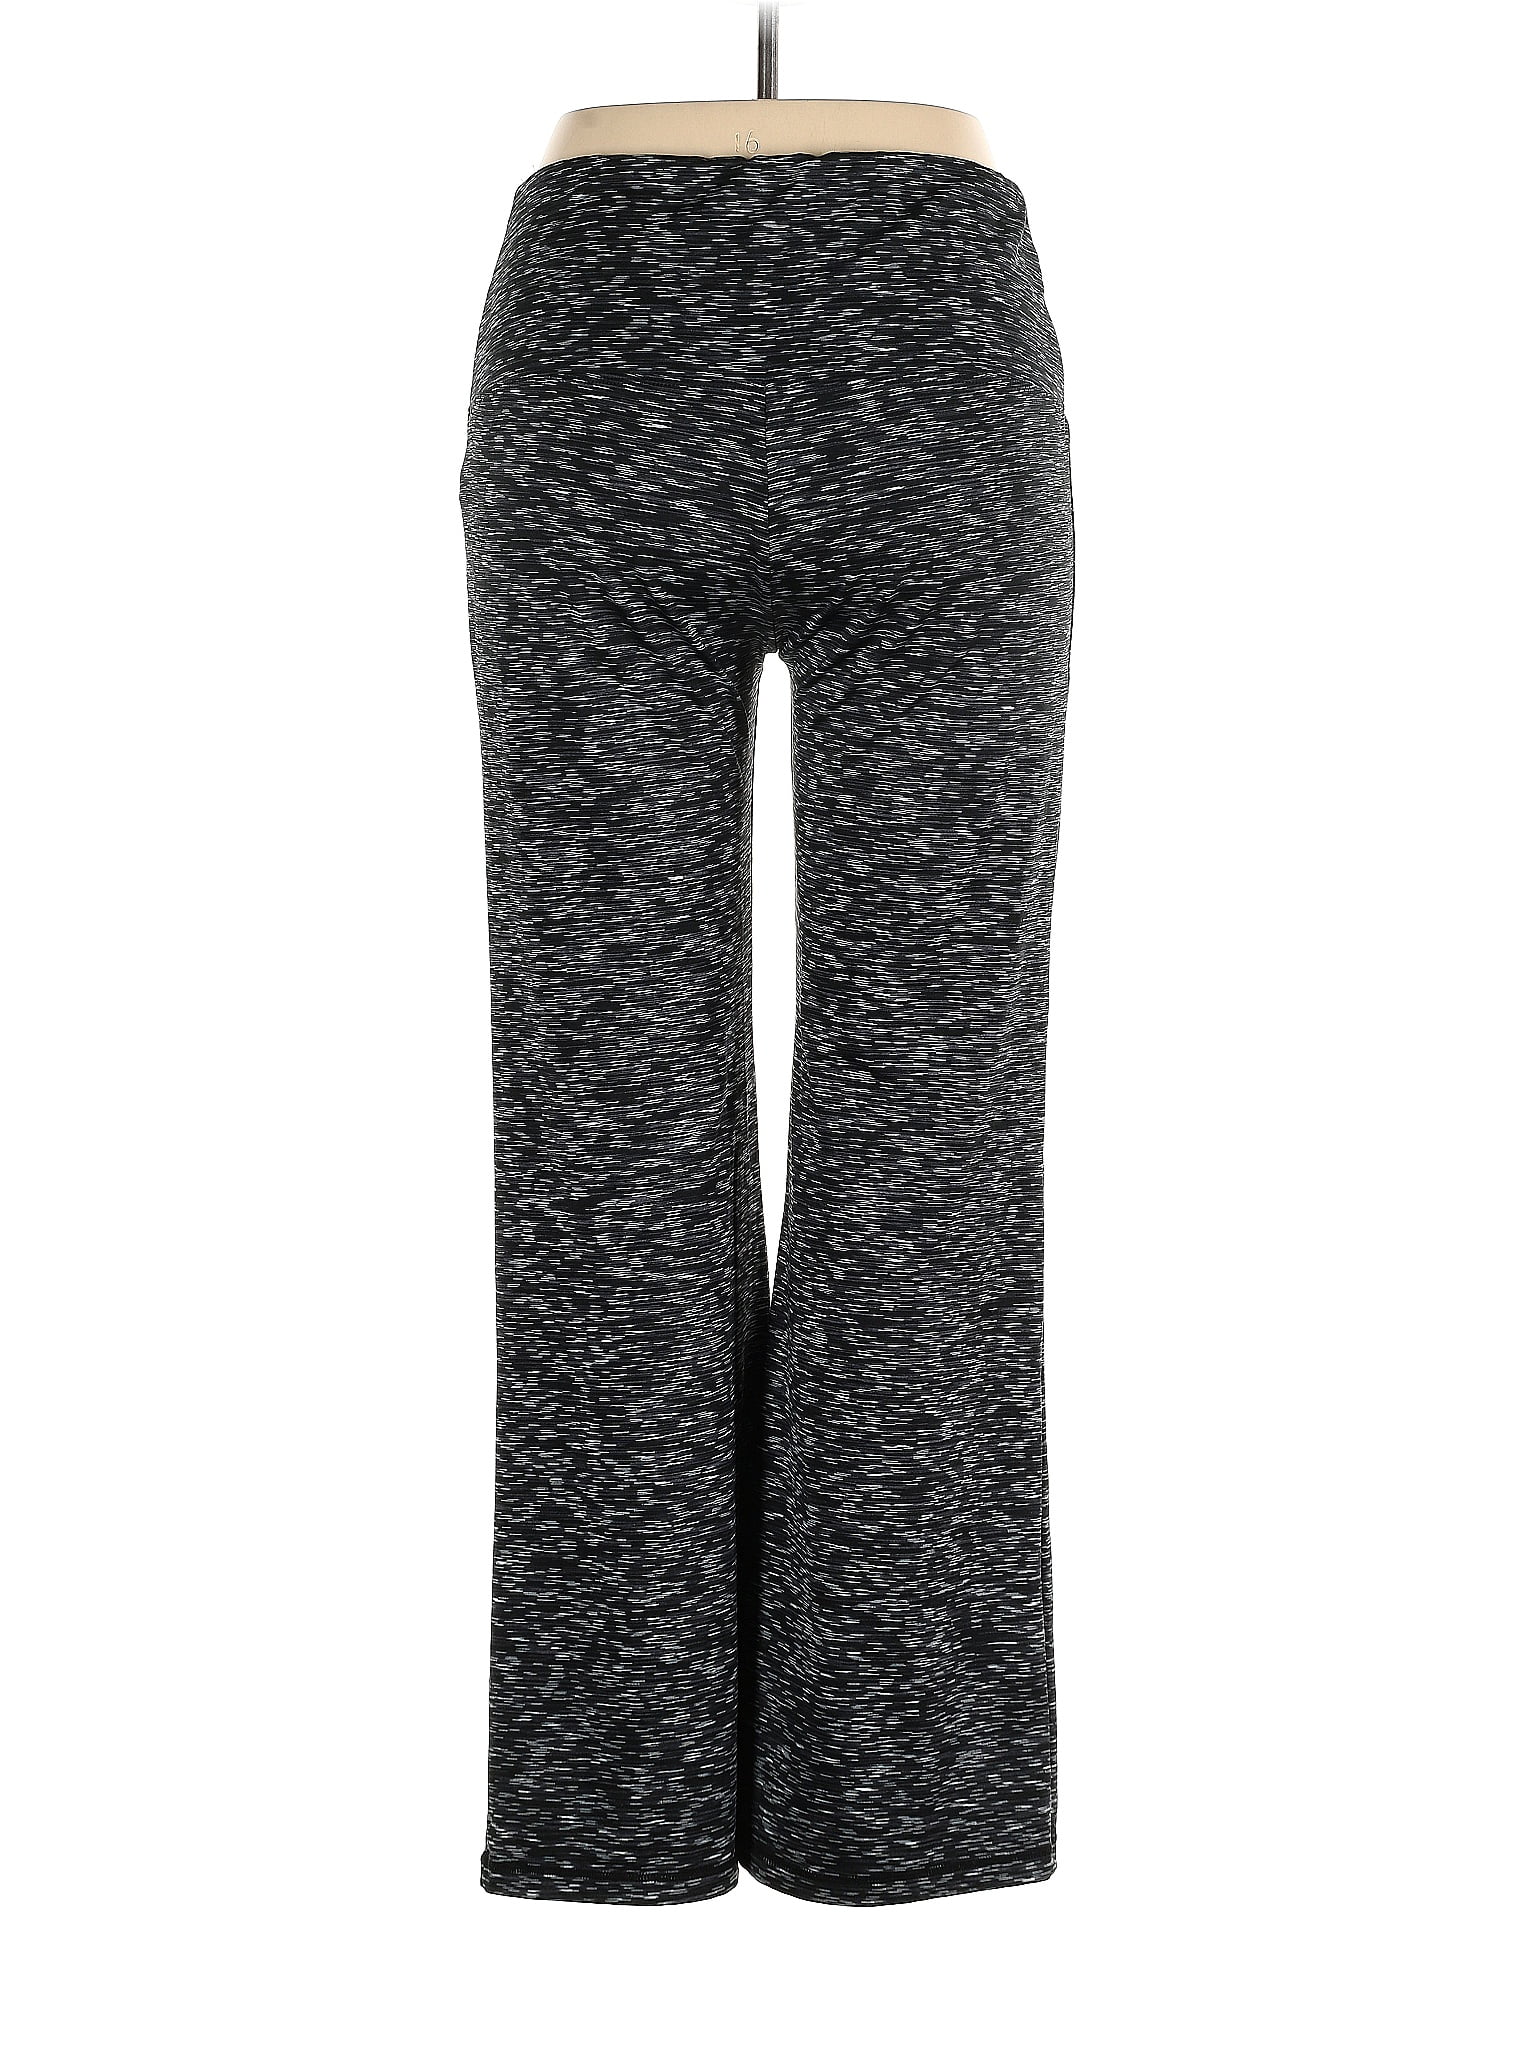 Ododos Black Gray Casual Pants Size XL - 56% off